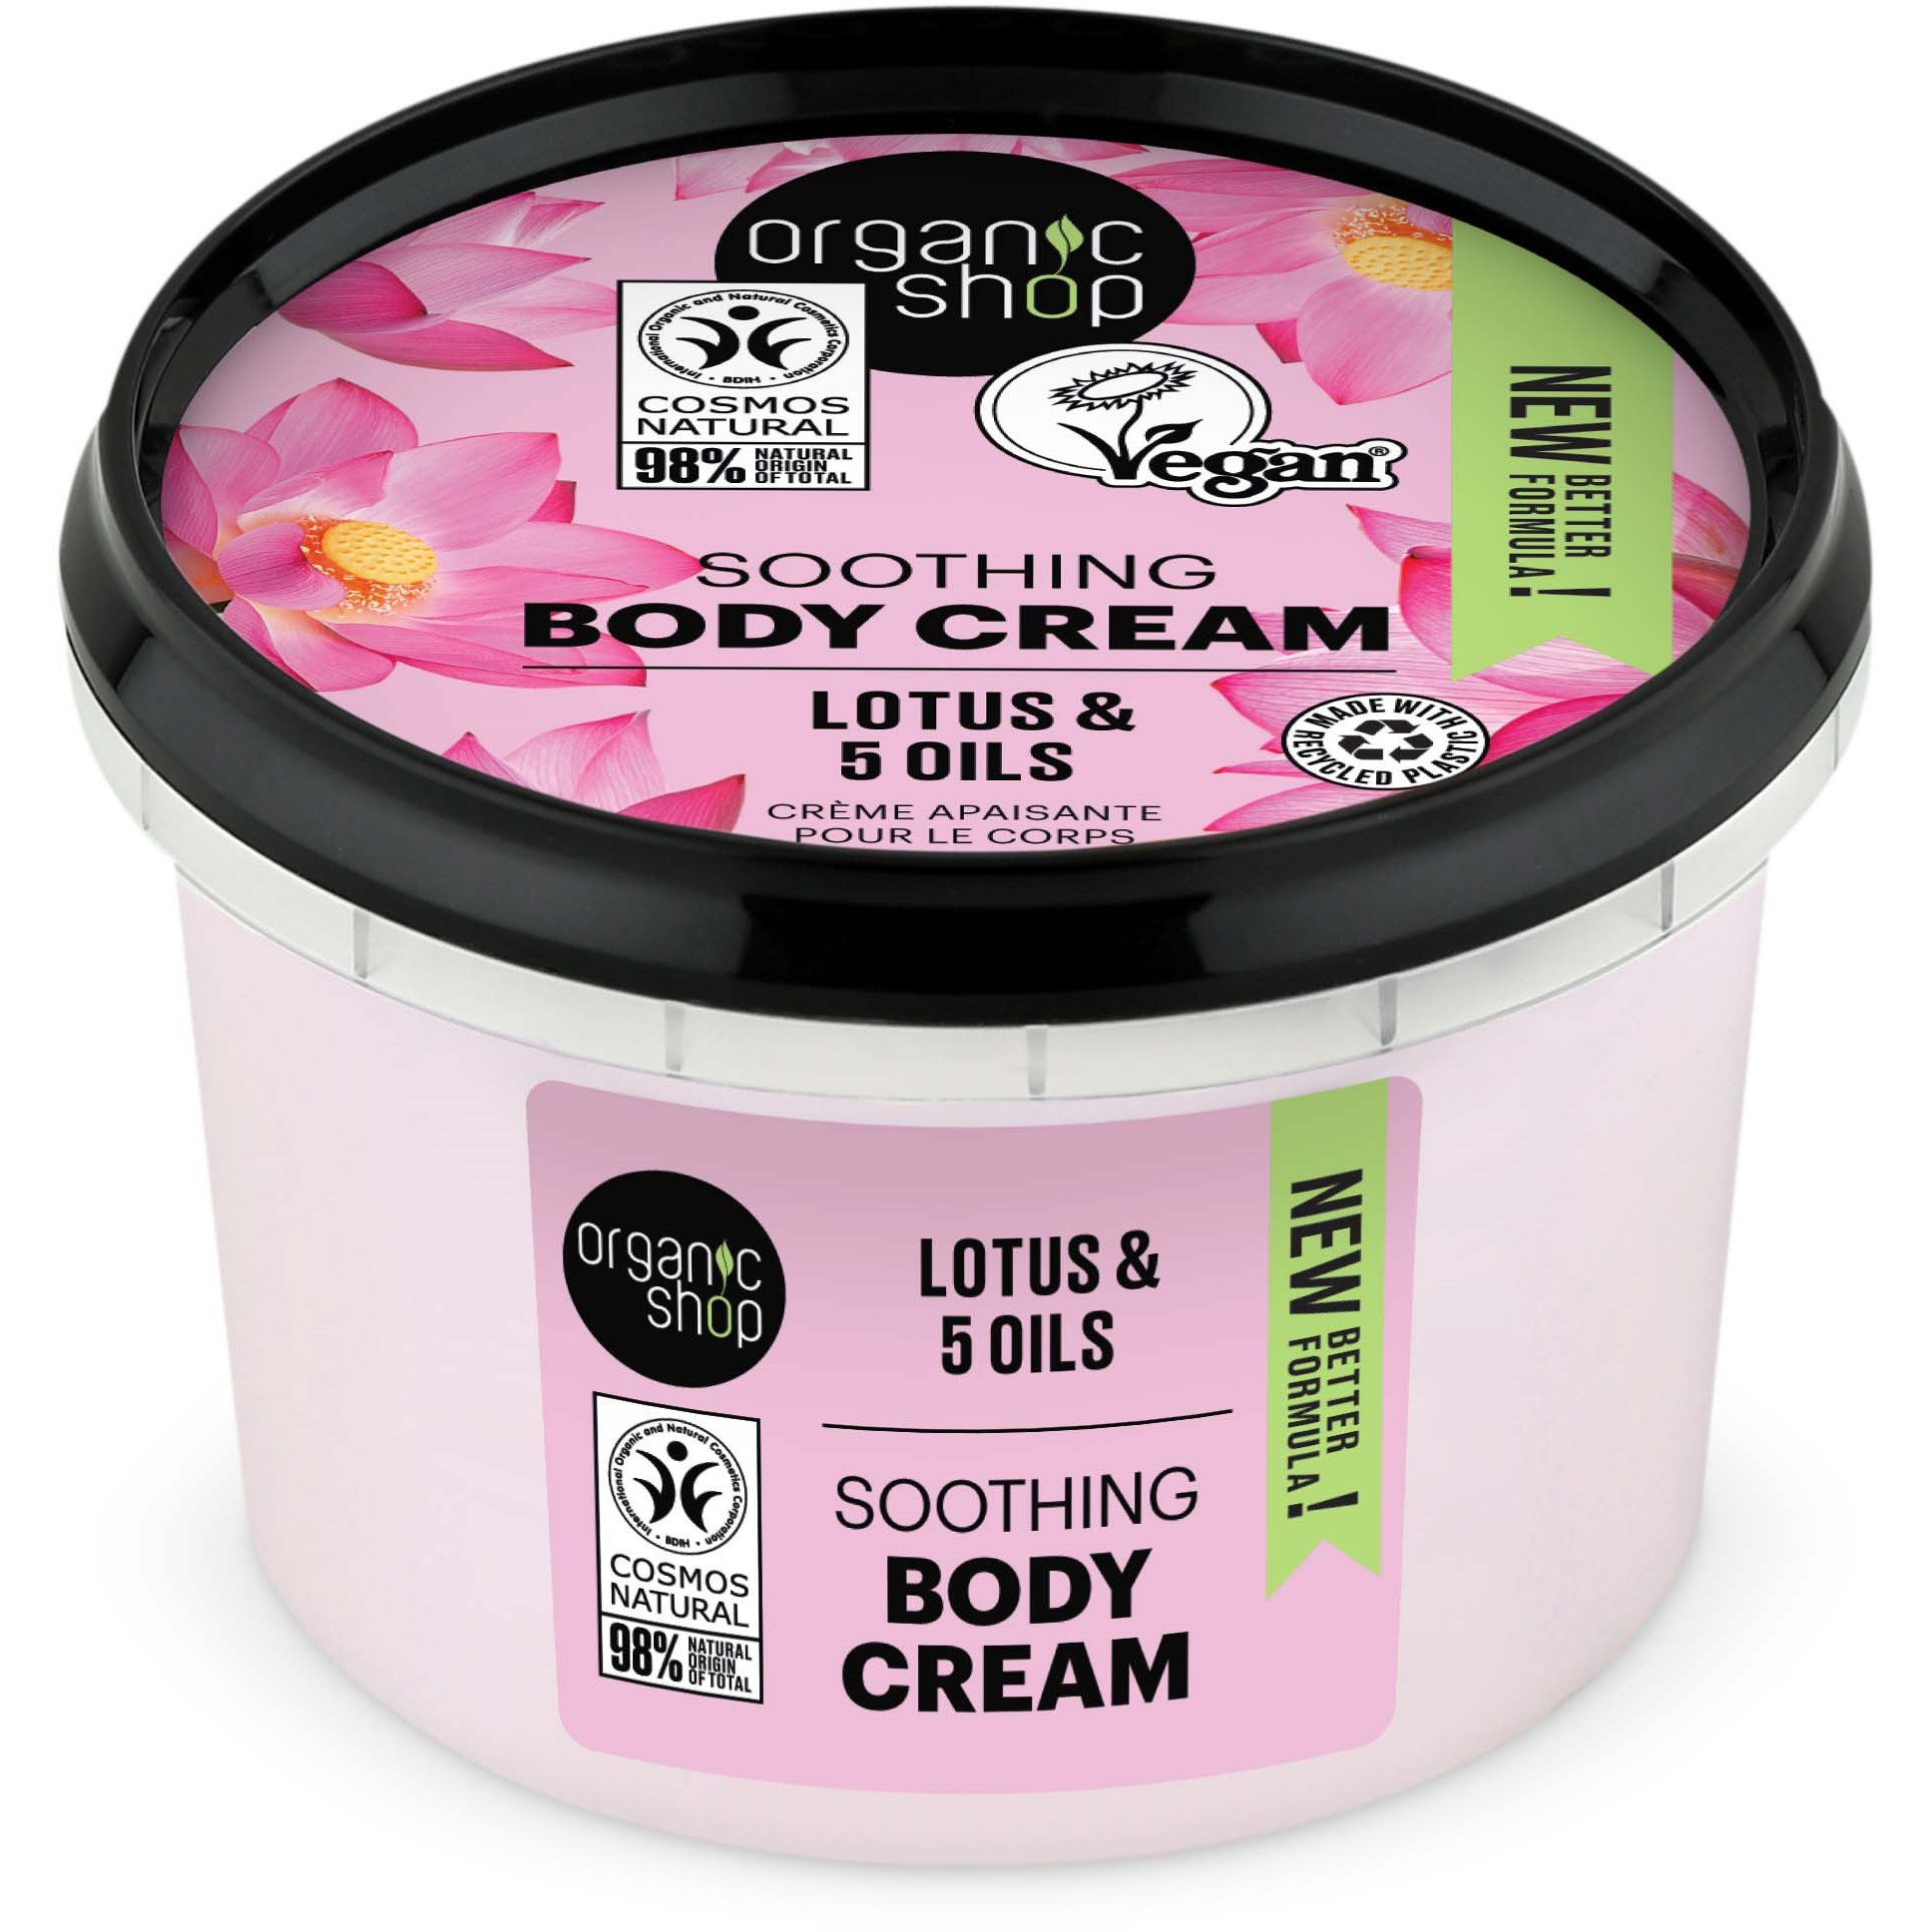 Organic Shop Soothing Body Cream Lotus & 5 Oils 250 ml